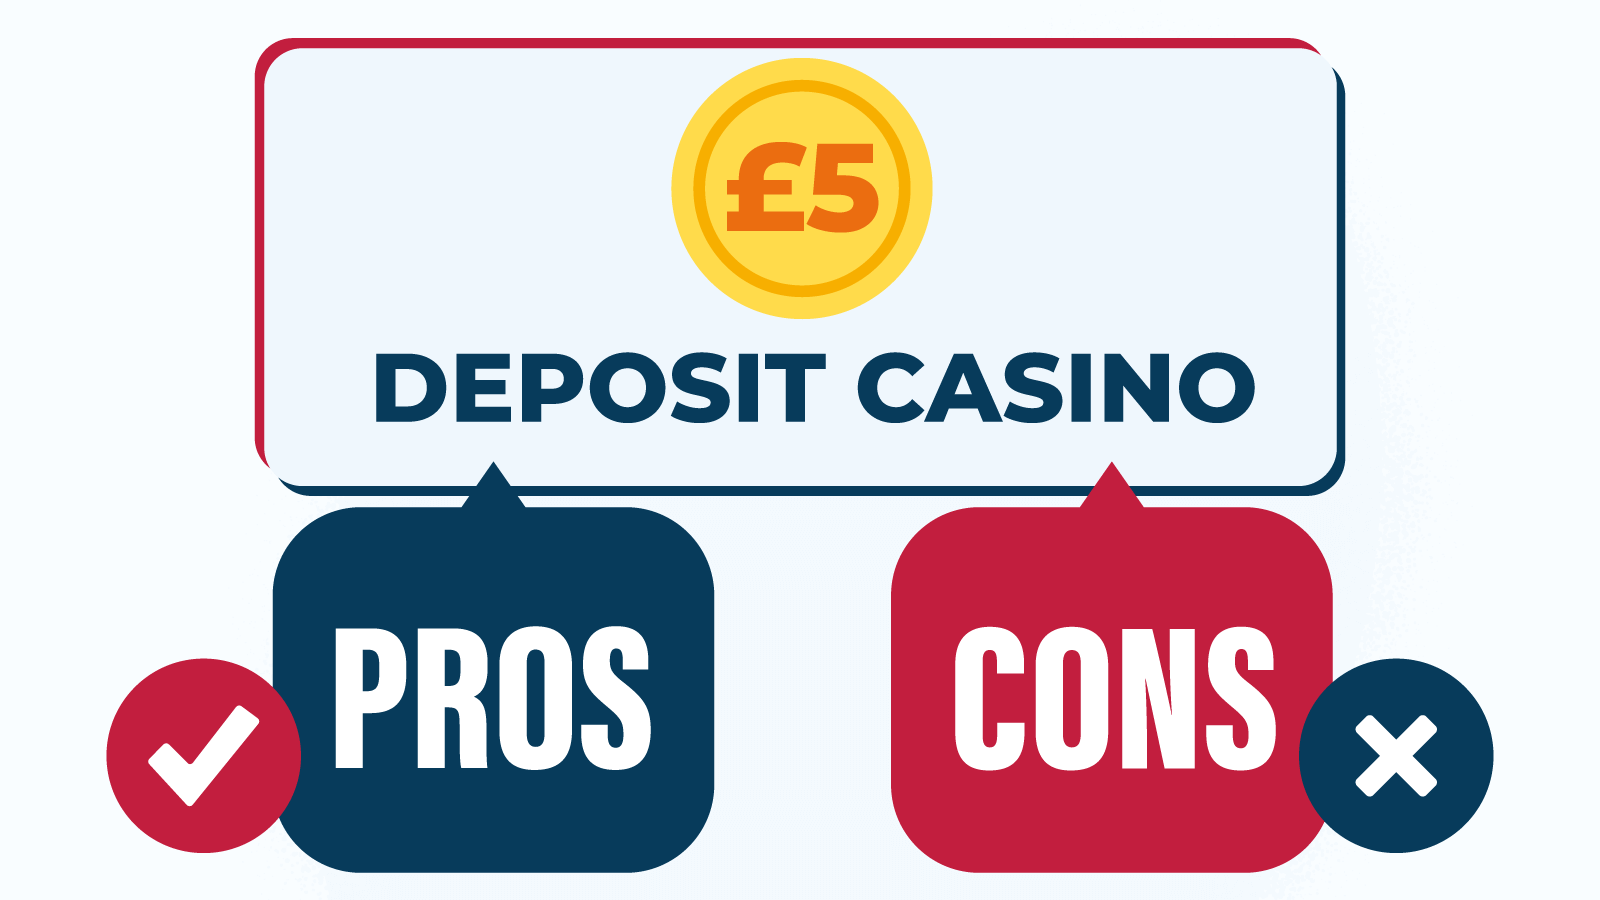 ¥5 Deposit Casino Pros and Cons